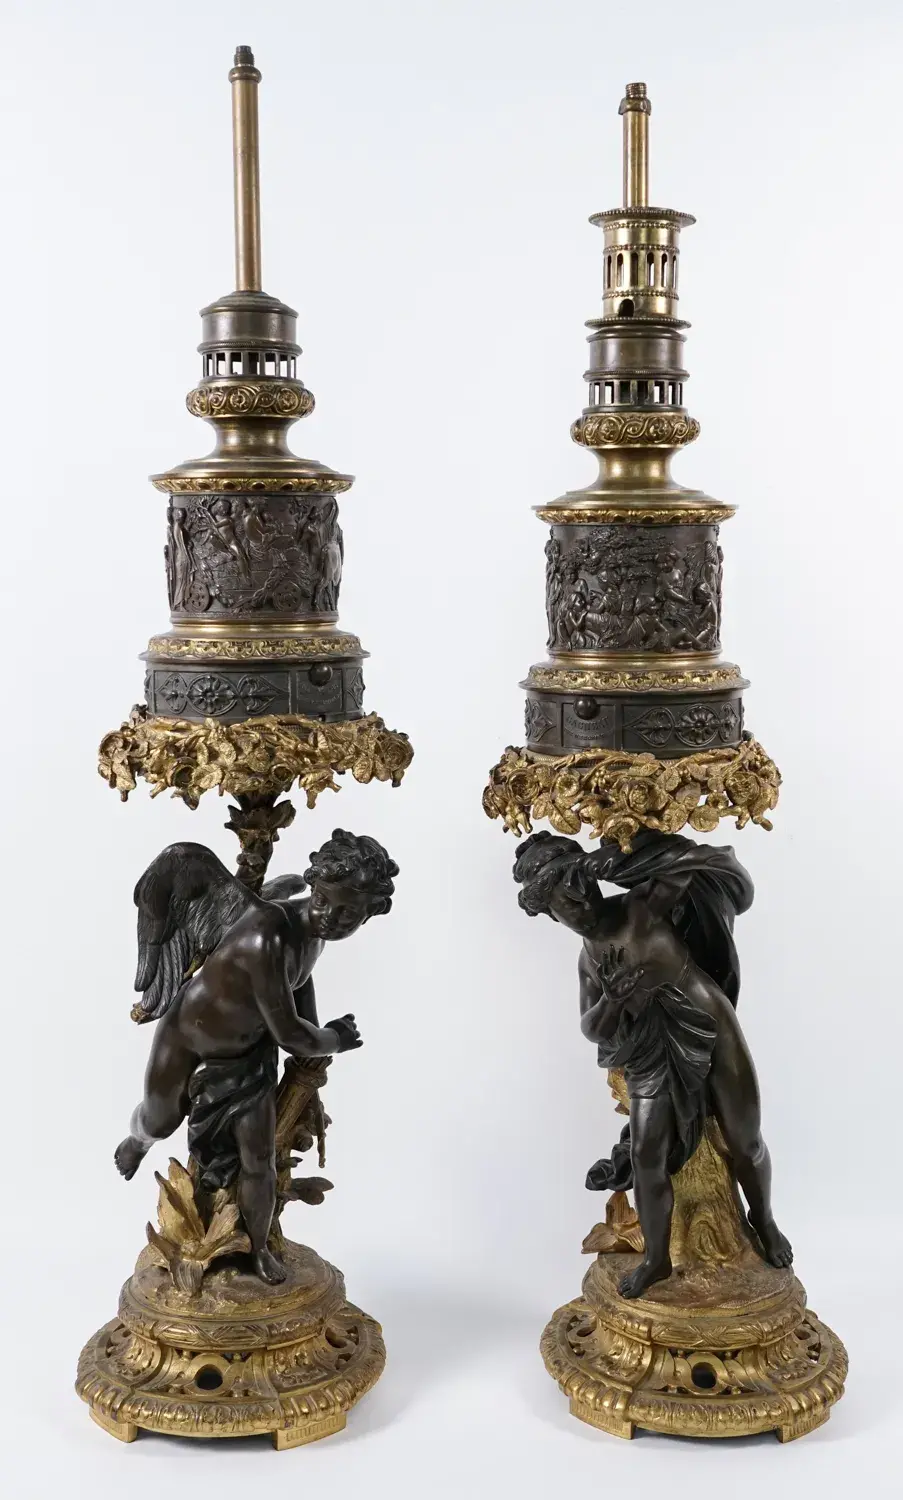 Pair of Napoleon III Gilt Bronze Rococo Revival Oil Lamps, Gagneau, circa 1860-1880 (Estimate: $25,000-30,000)